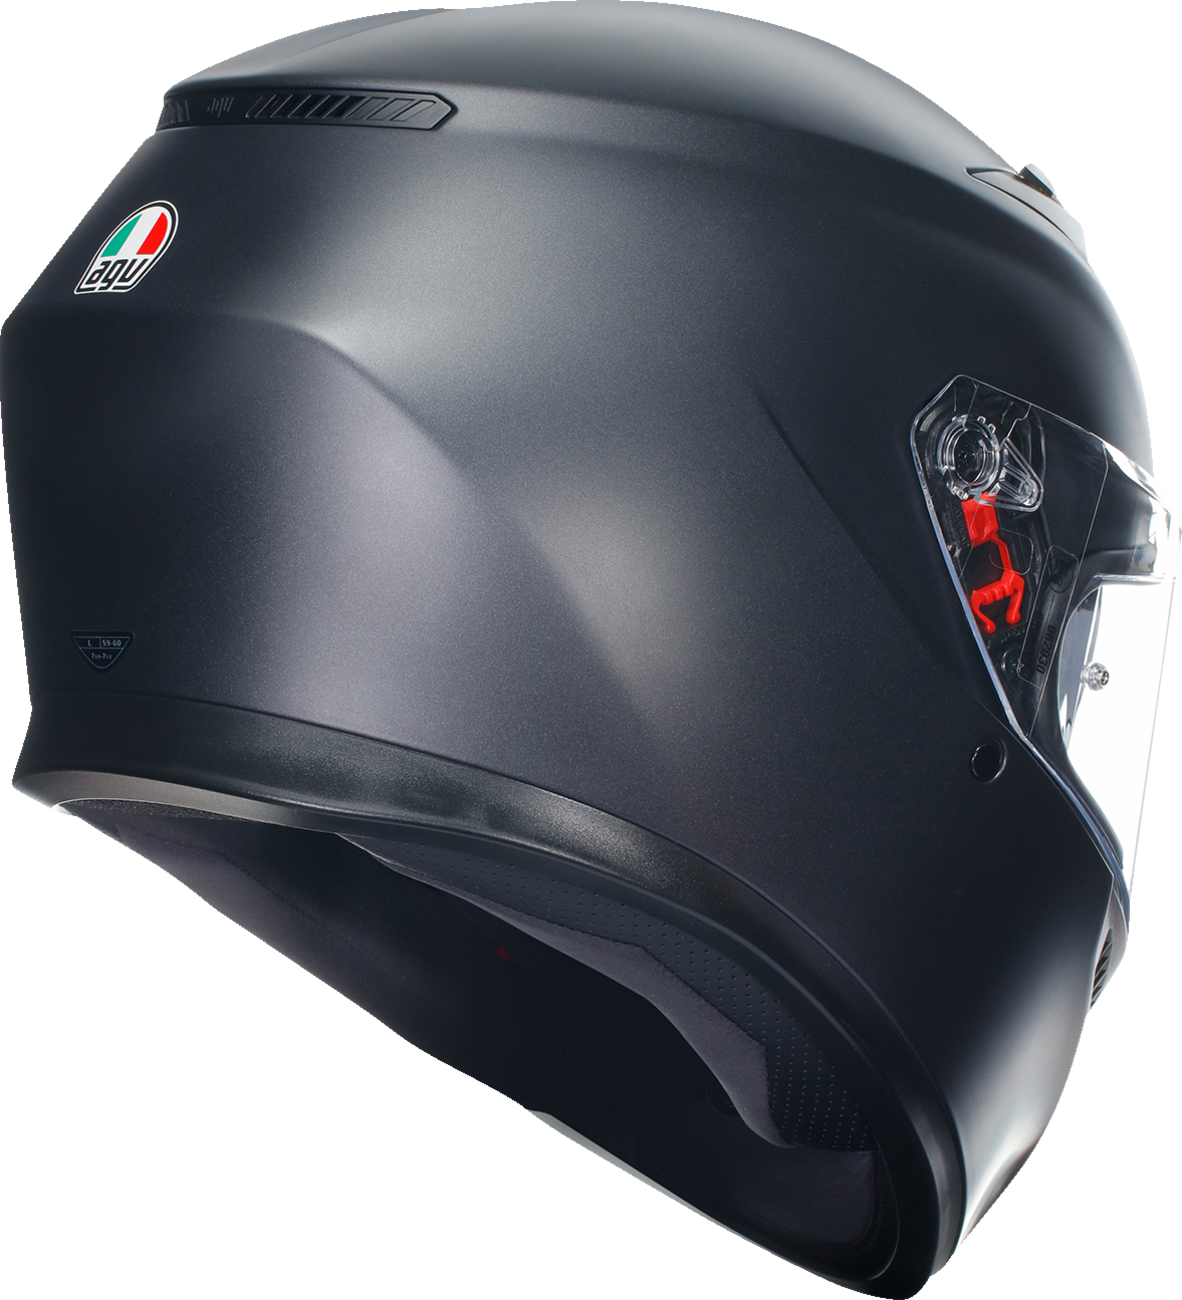 AGV K3 Helmet - Matte Black - XS 2118381004004XS